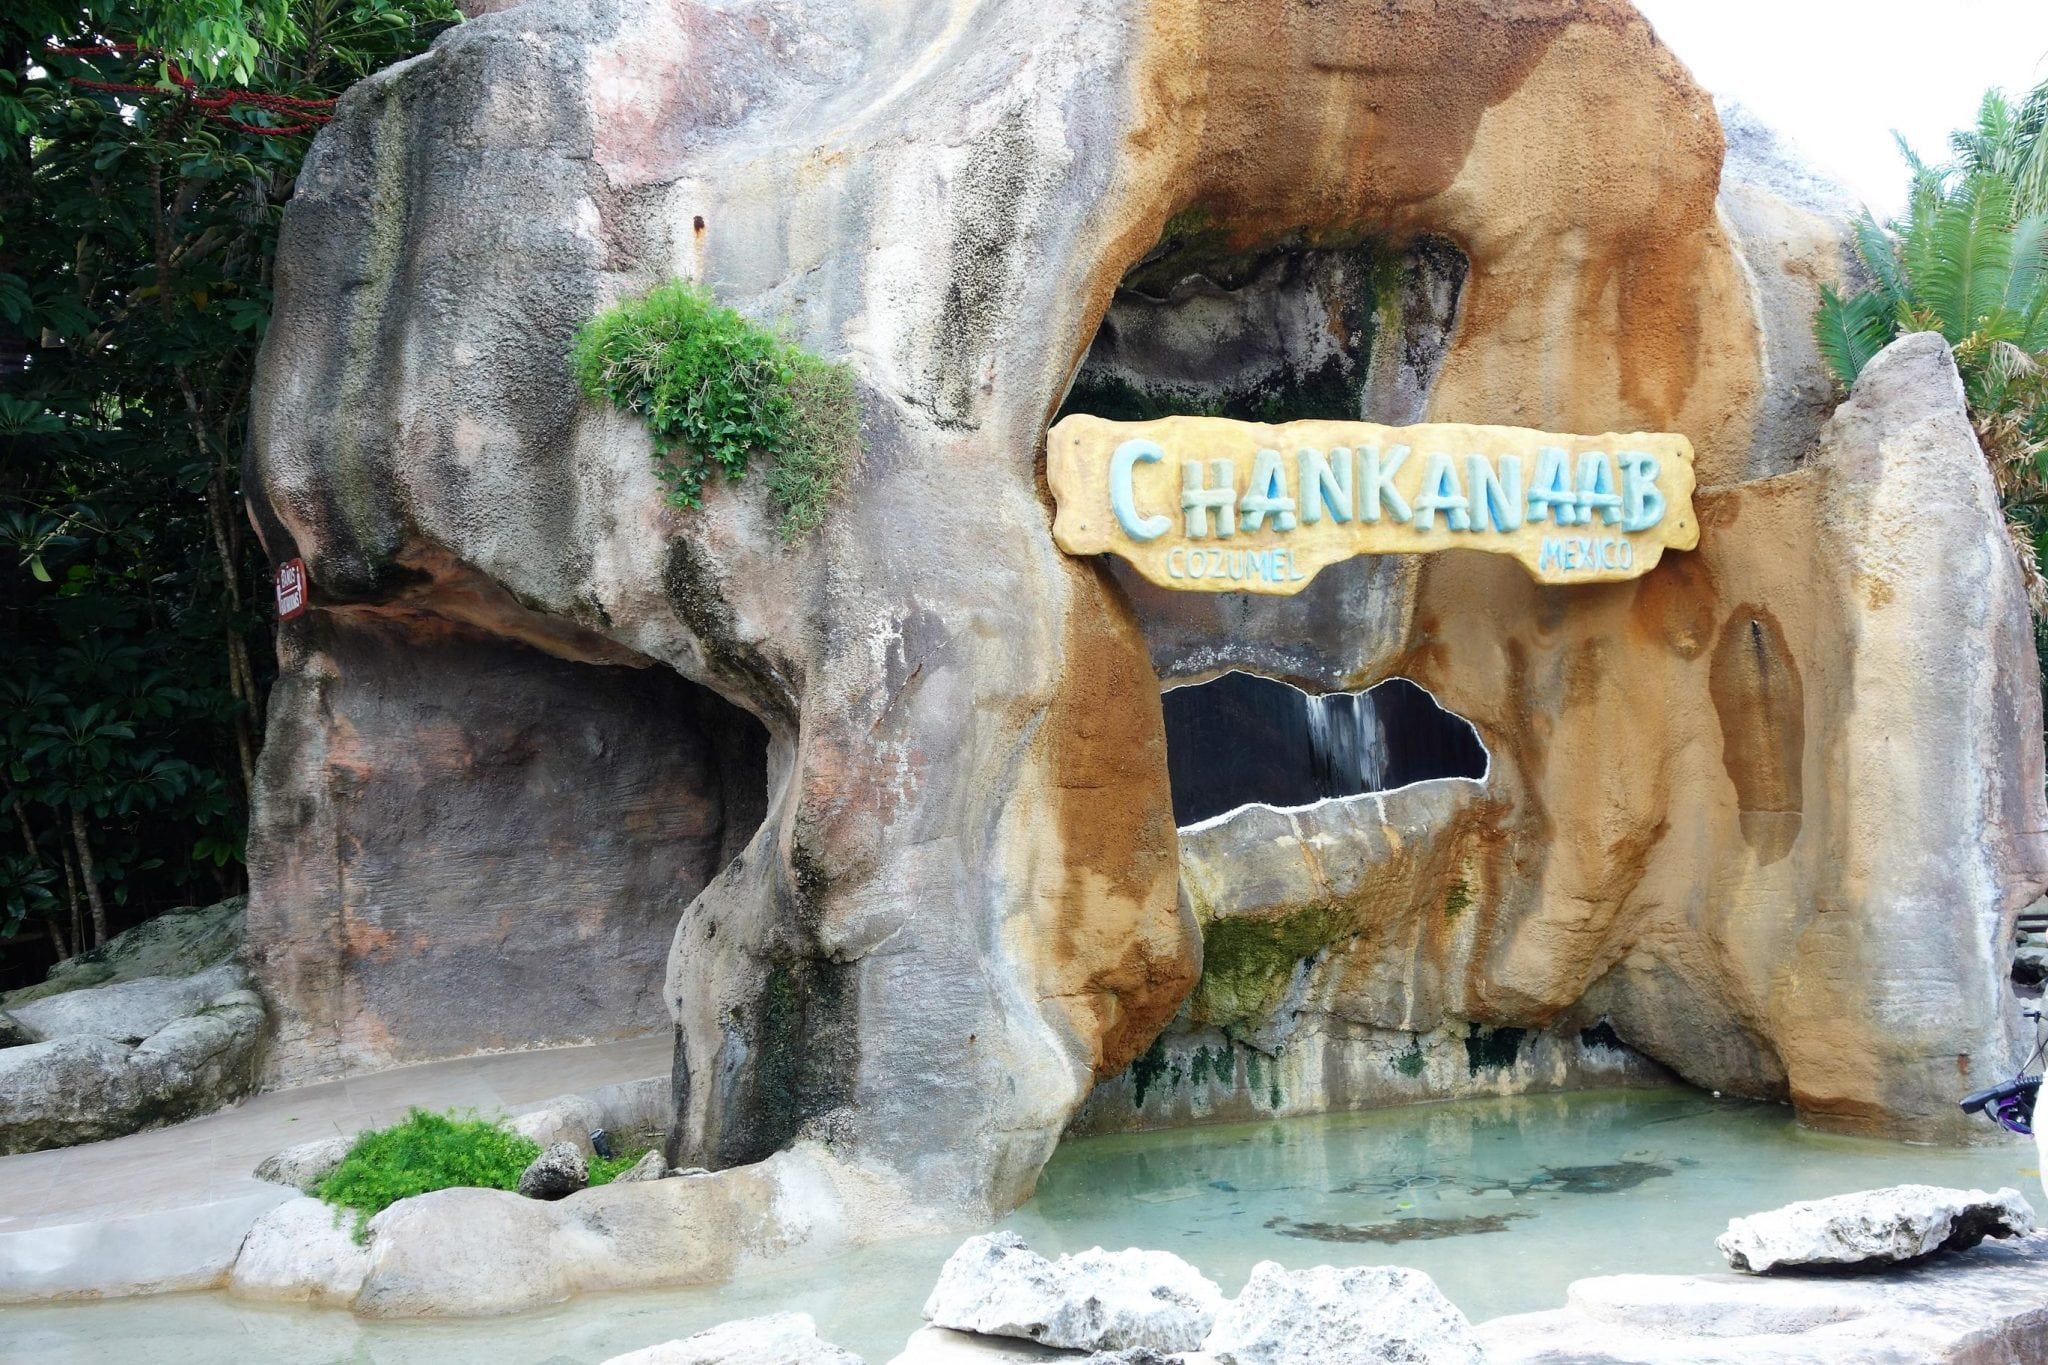 Chankanaab Adventure Beach Park